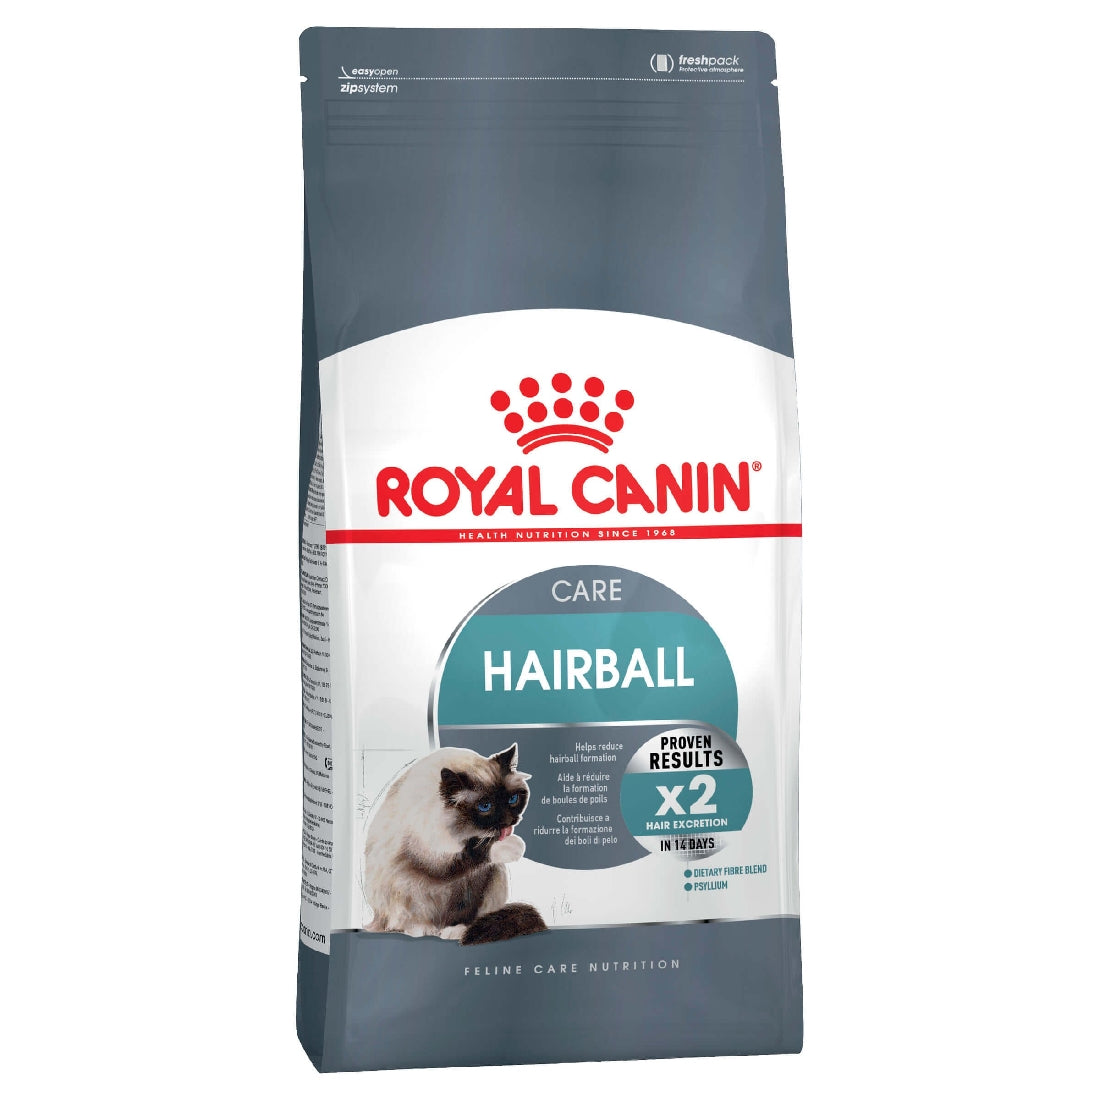 Royal Canin Cat Hairball 2kg